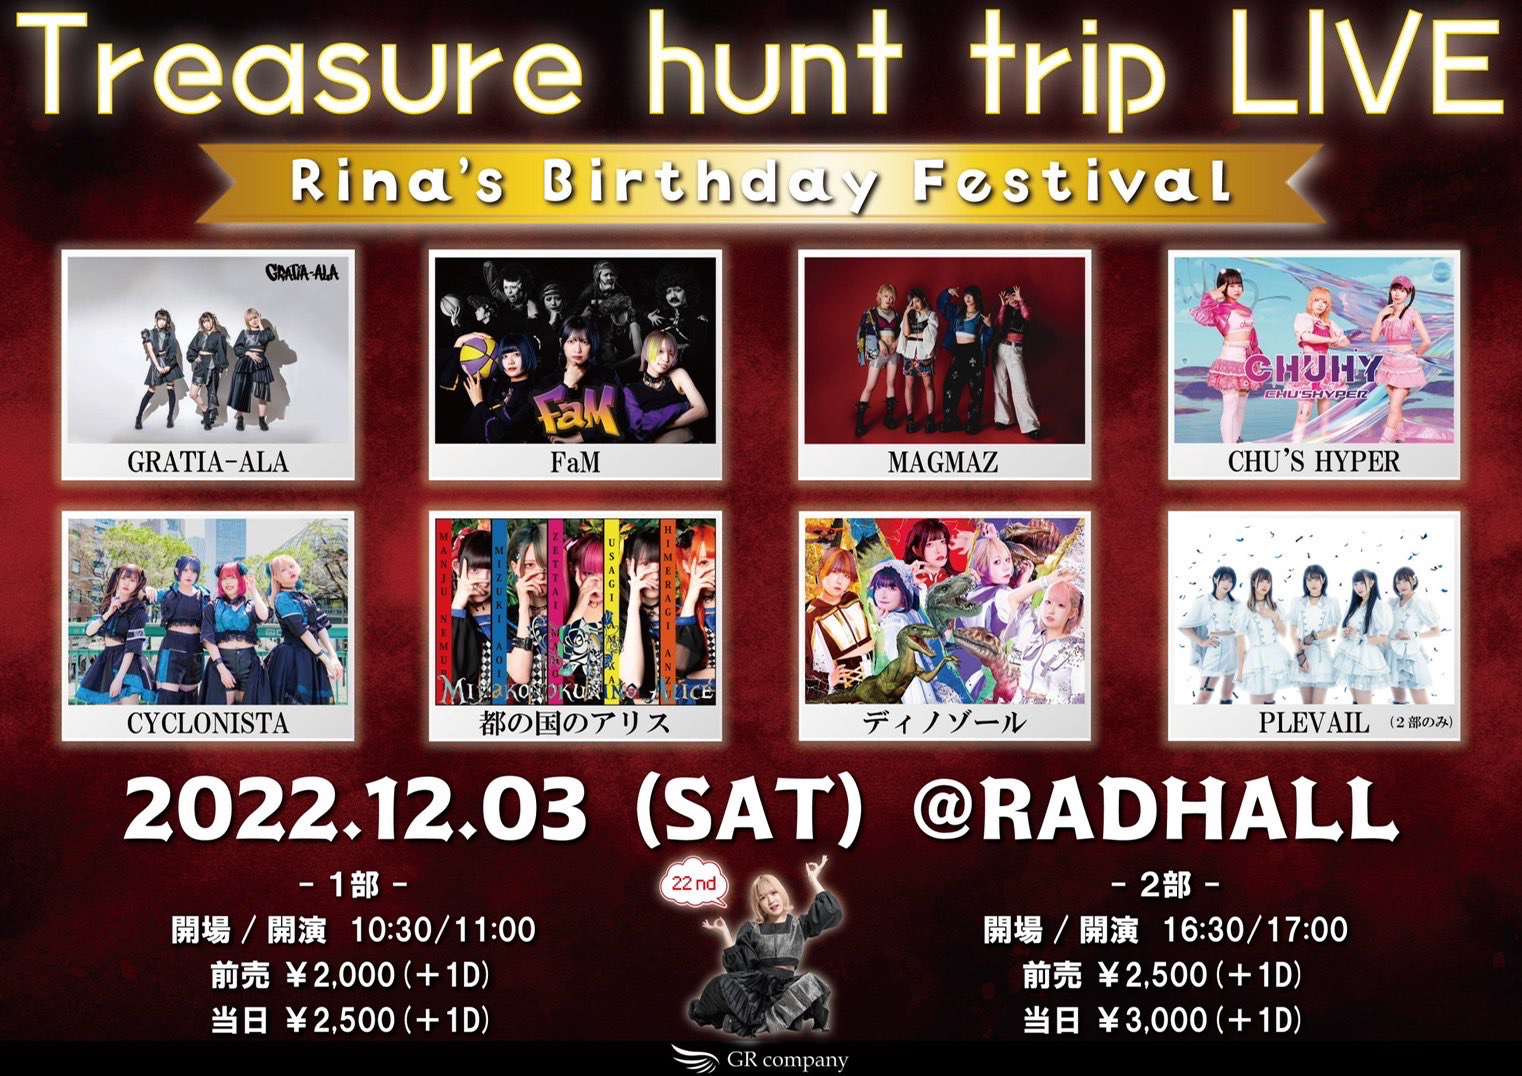 Treasure hunt trip LIVE Rina's Birthday Festival